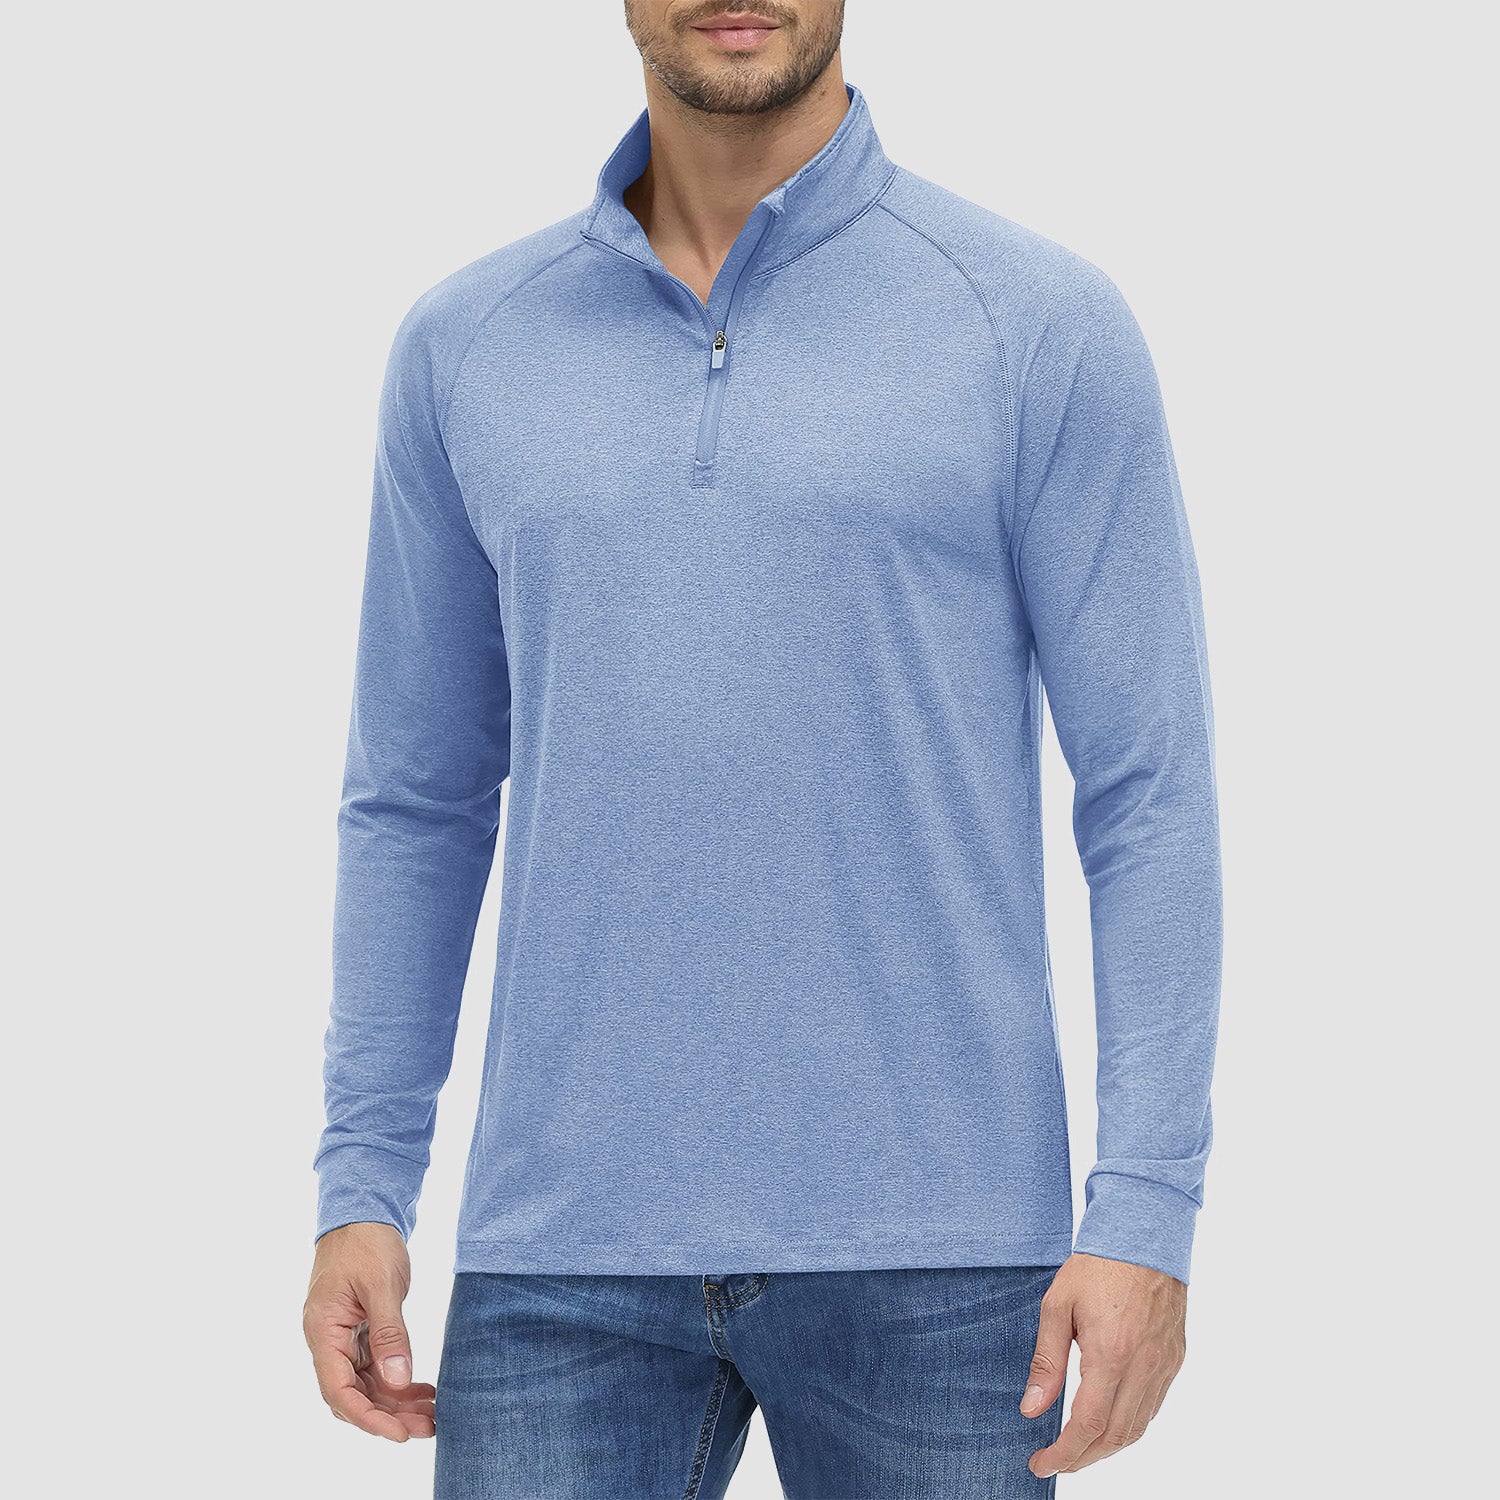 Men's 1/4 Zip Long Sleeve Polo Shirt UPF 50+ Quick Dry Shirt, Light Blue / XS